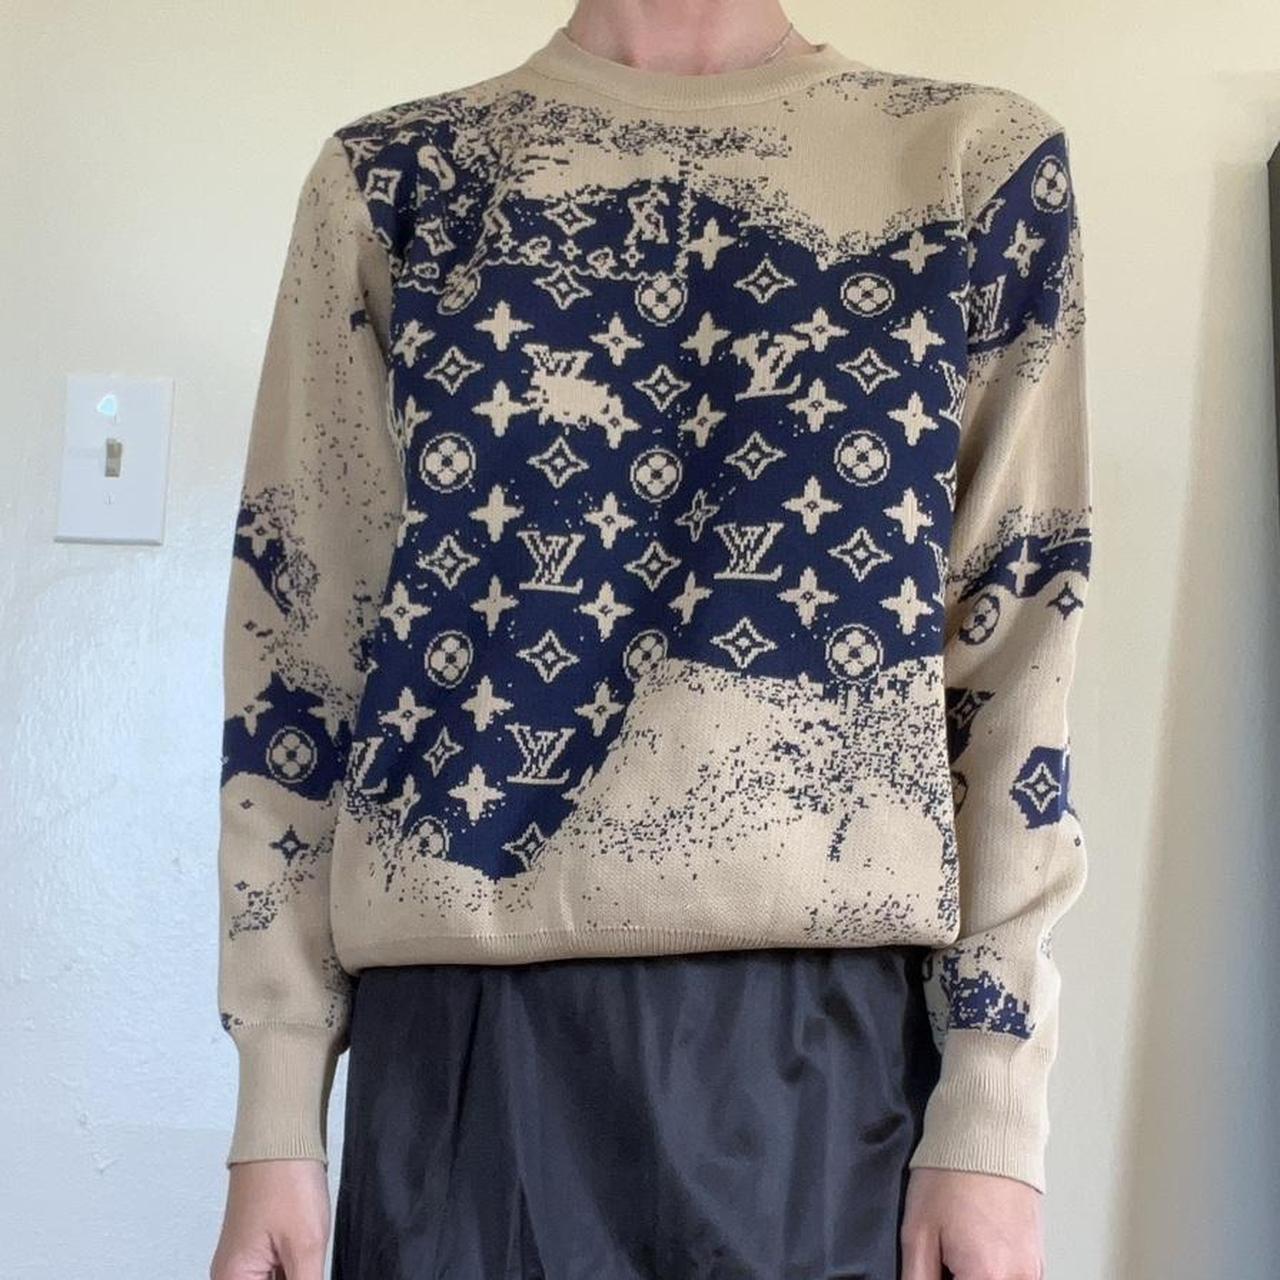 Chewy Vuitton Retro Monogram Sweater